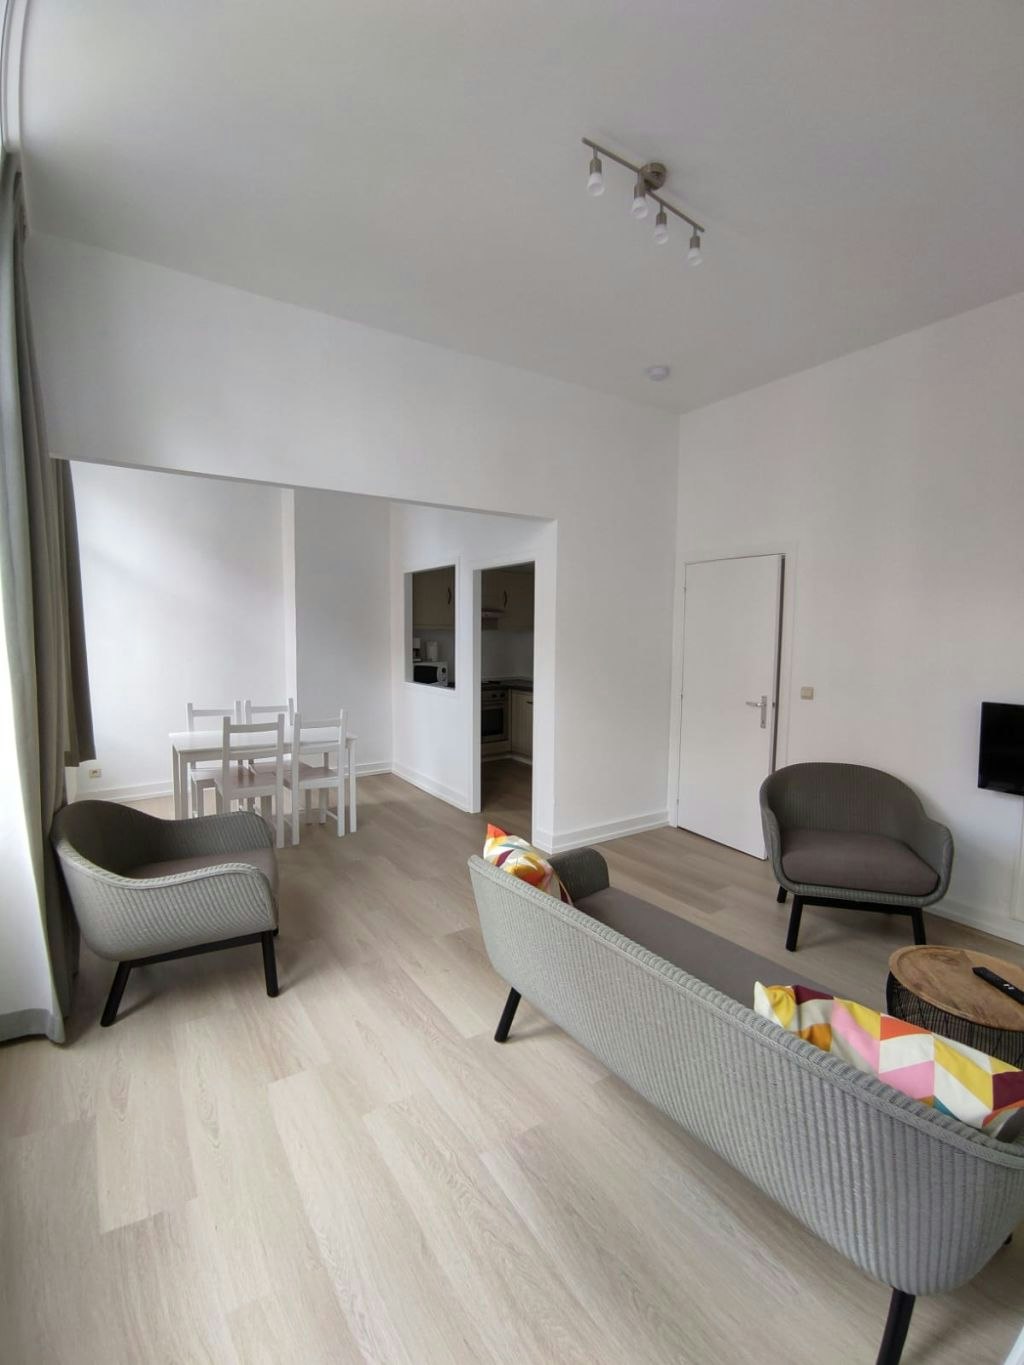 Wonderful 1-bedroom apartment near Schuman Station